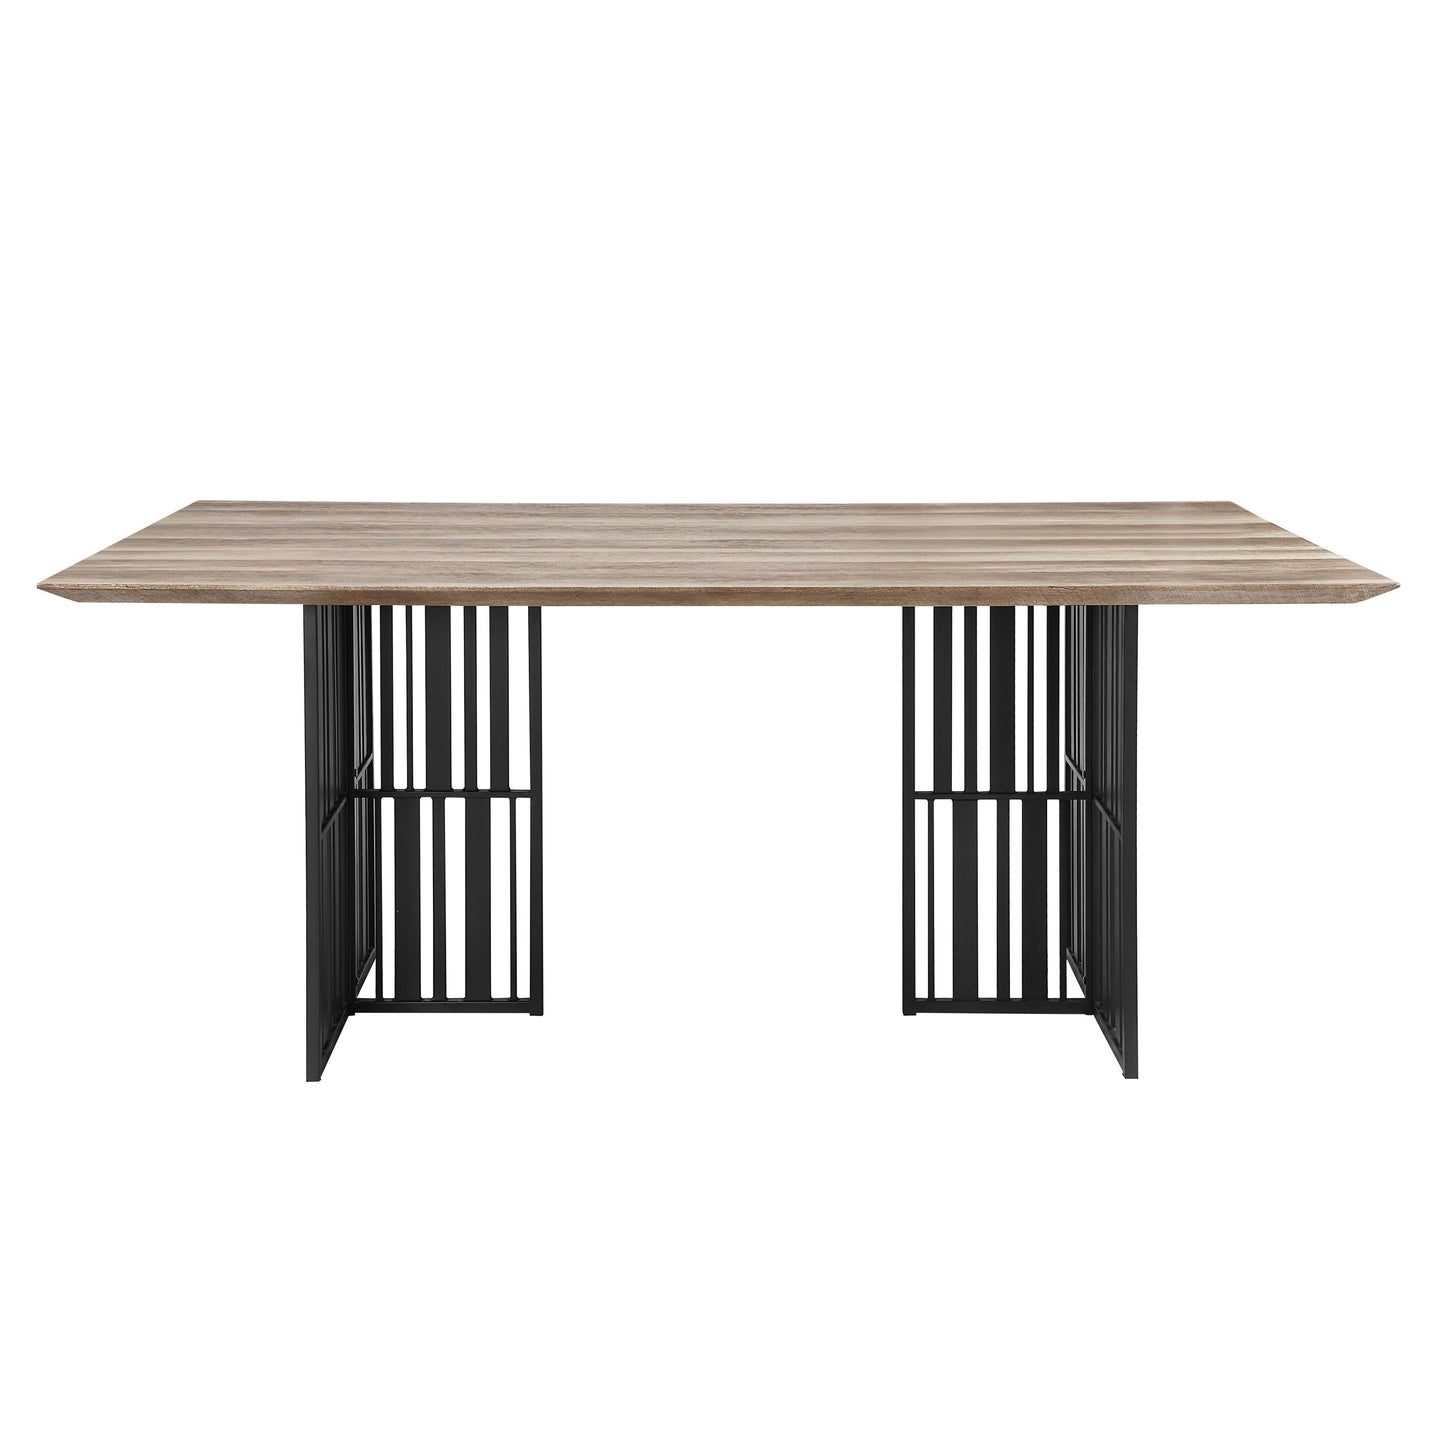 ACME Zudora Dining Table, Antique Oak & Black Finish DN01757 - Enova Luxe Home Store